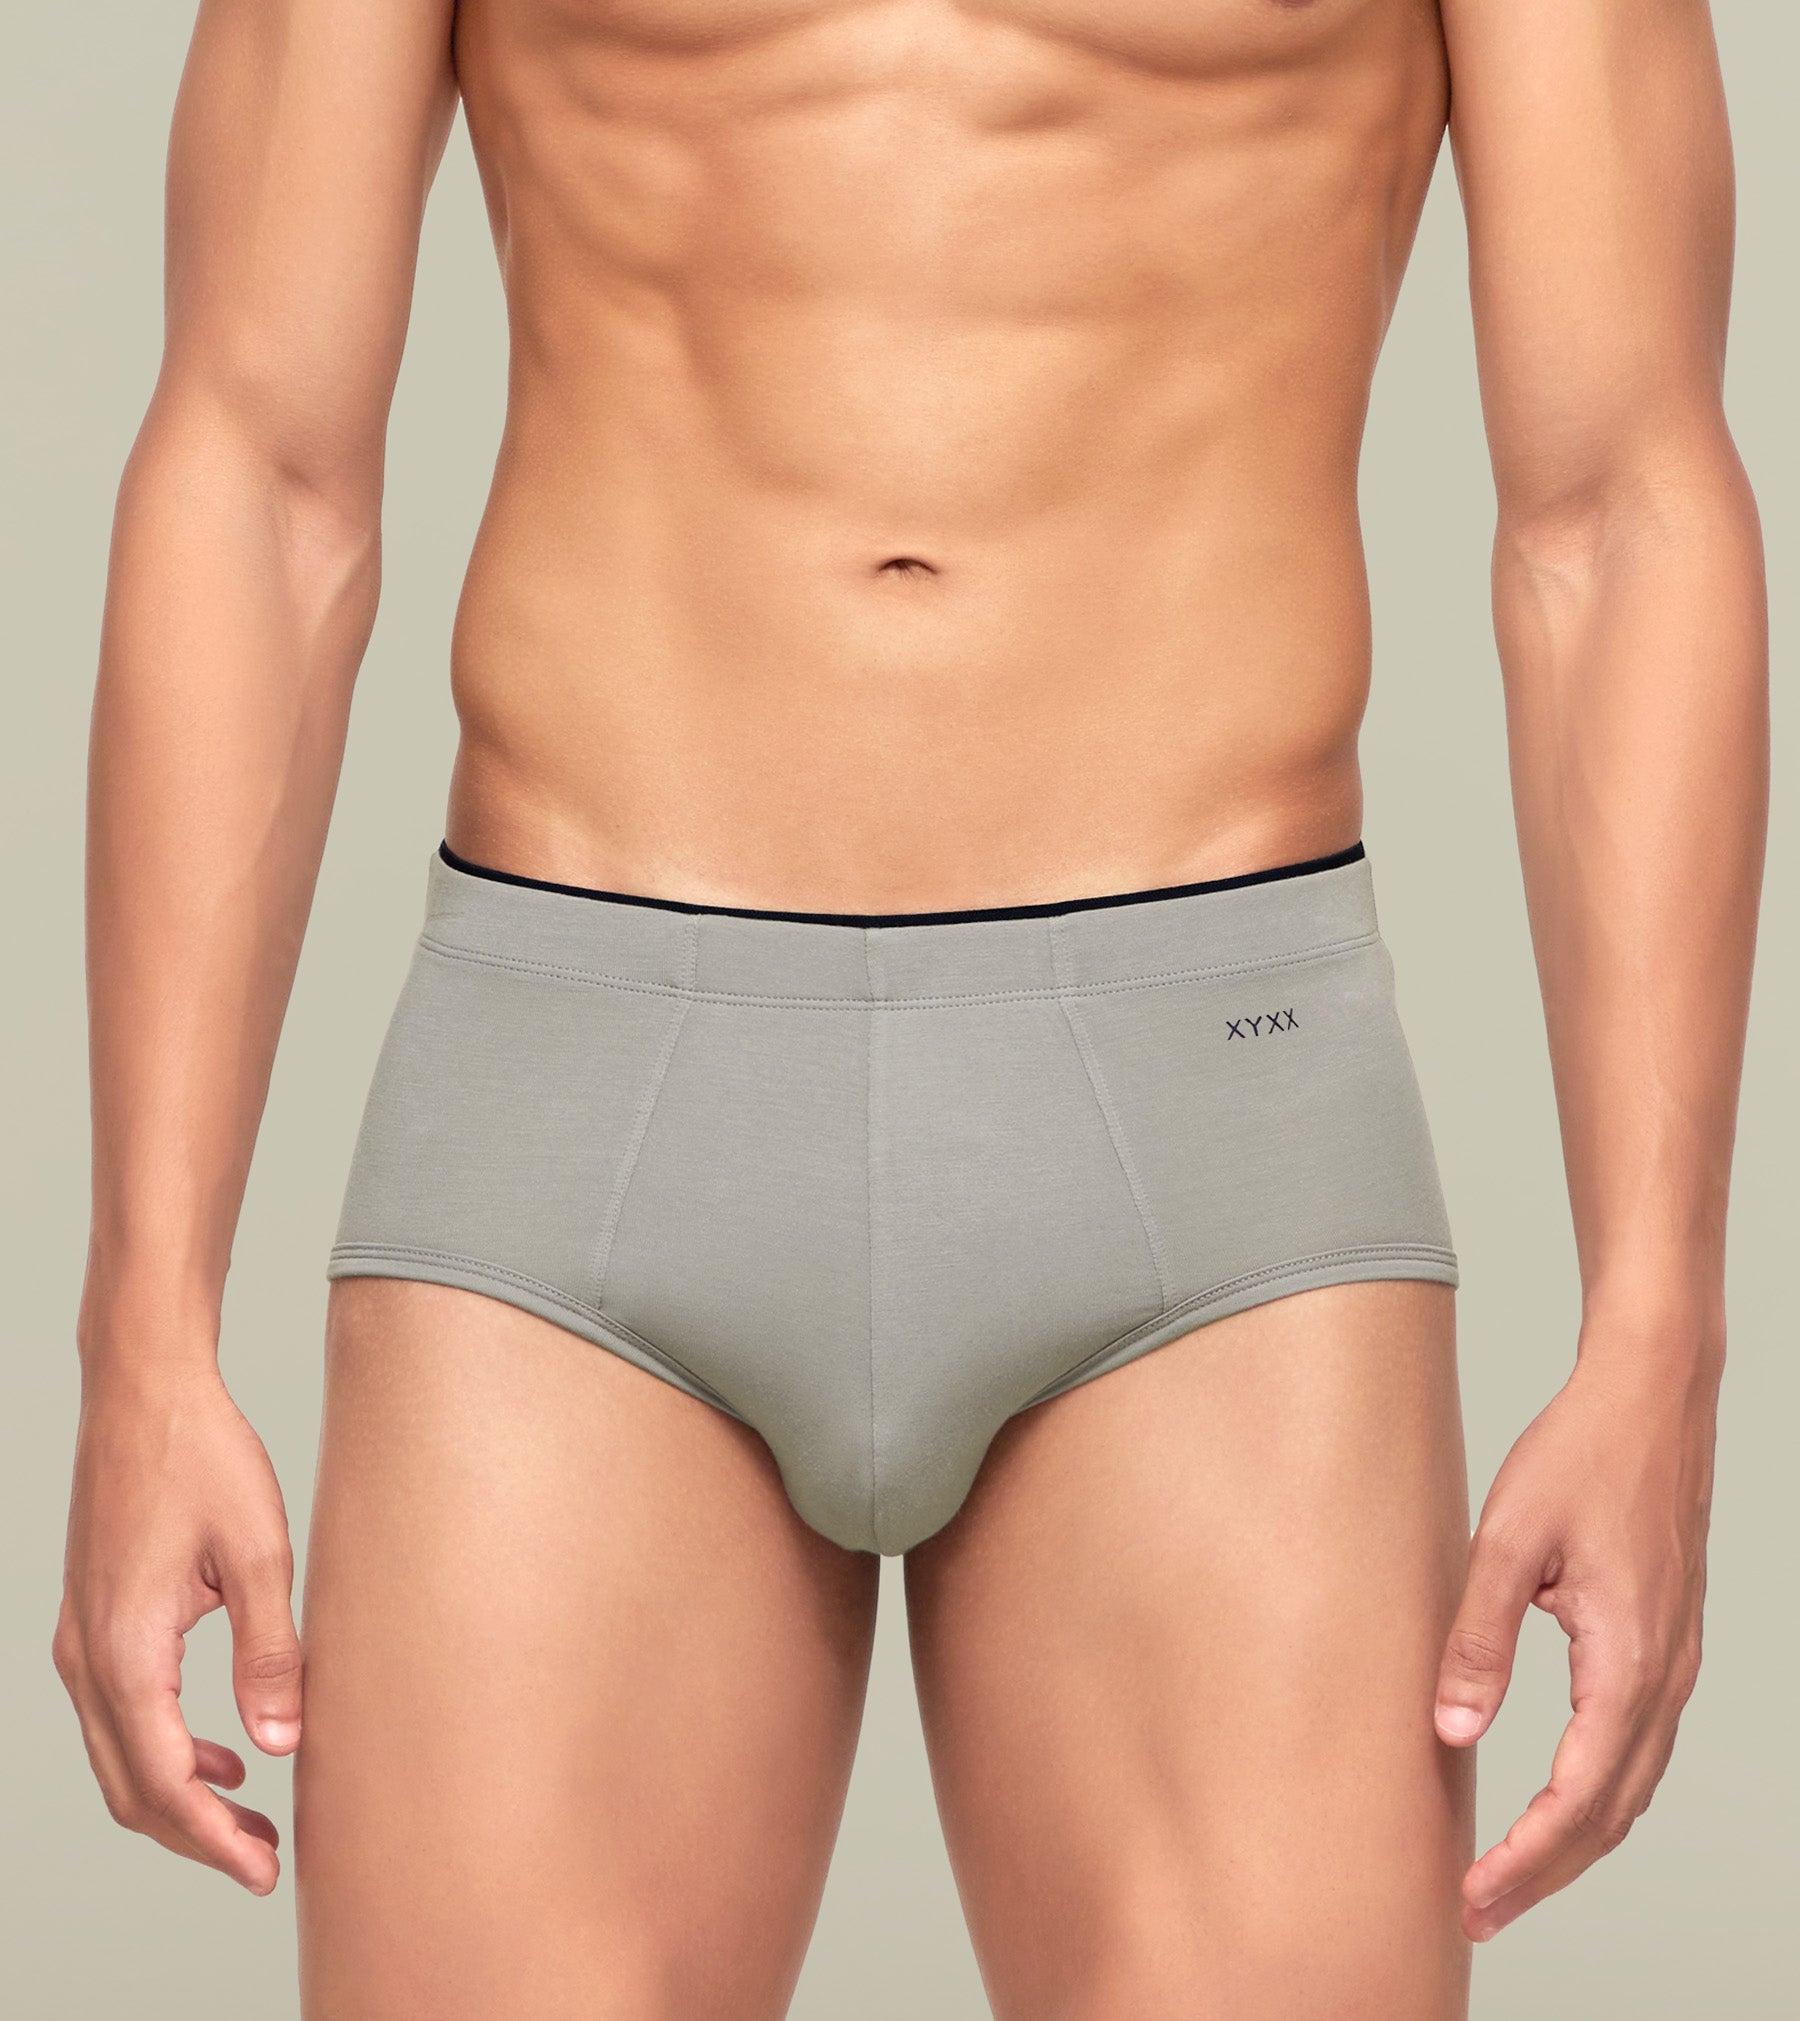 XYXX Uno Medley TENCEL Modal Trunk Premium Underwear For Men at Rs